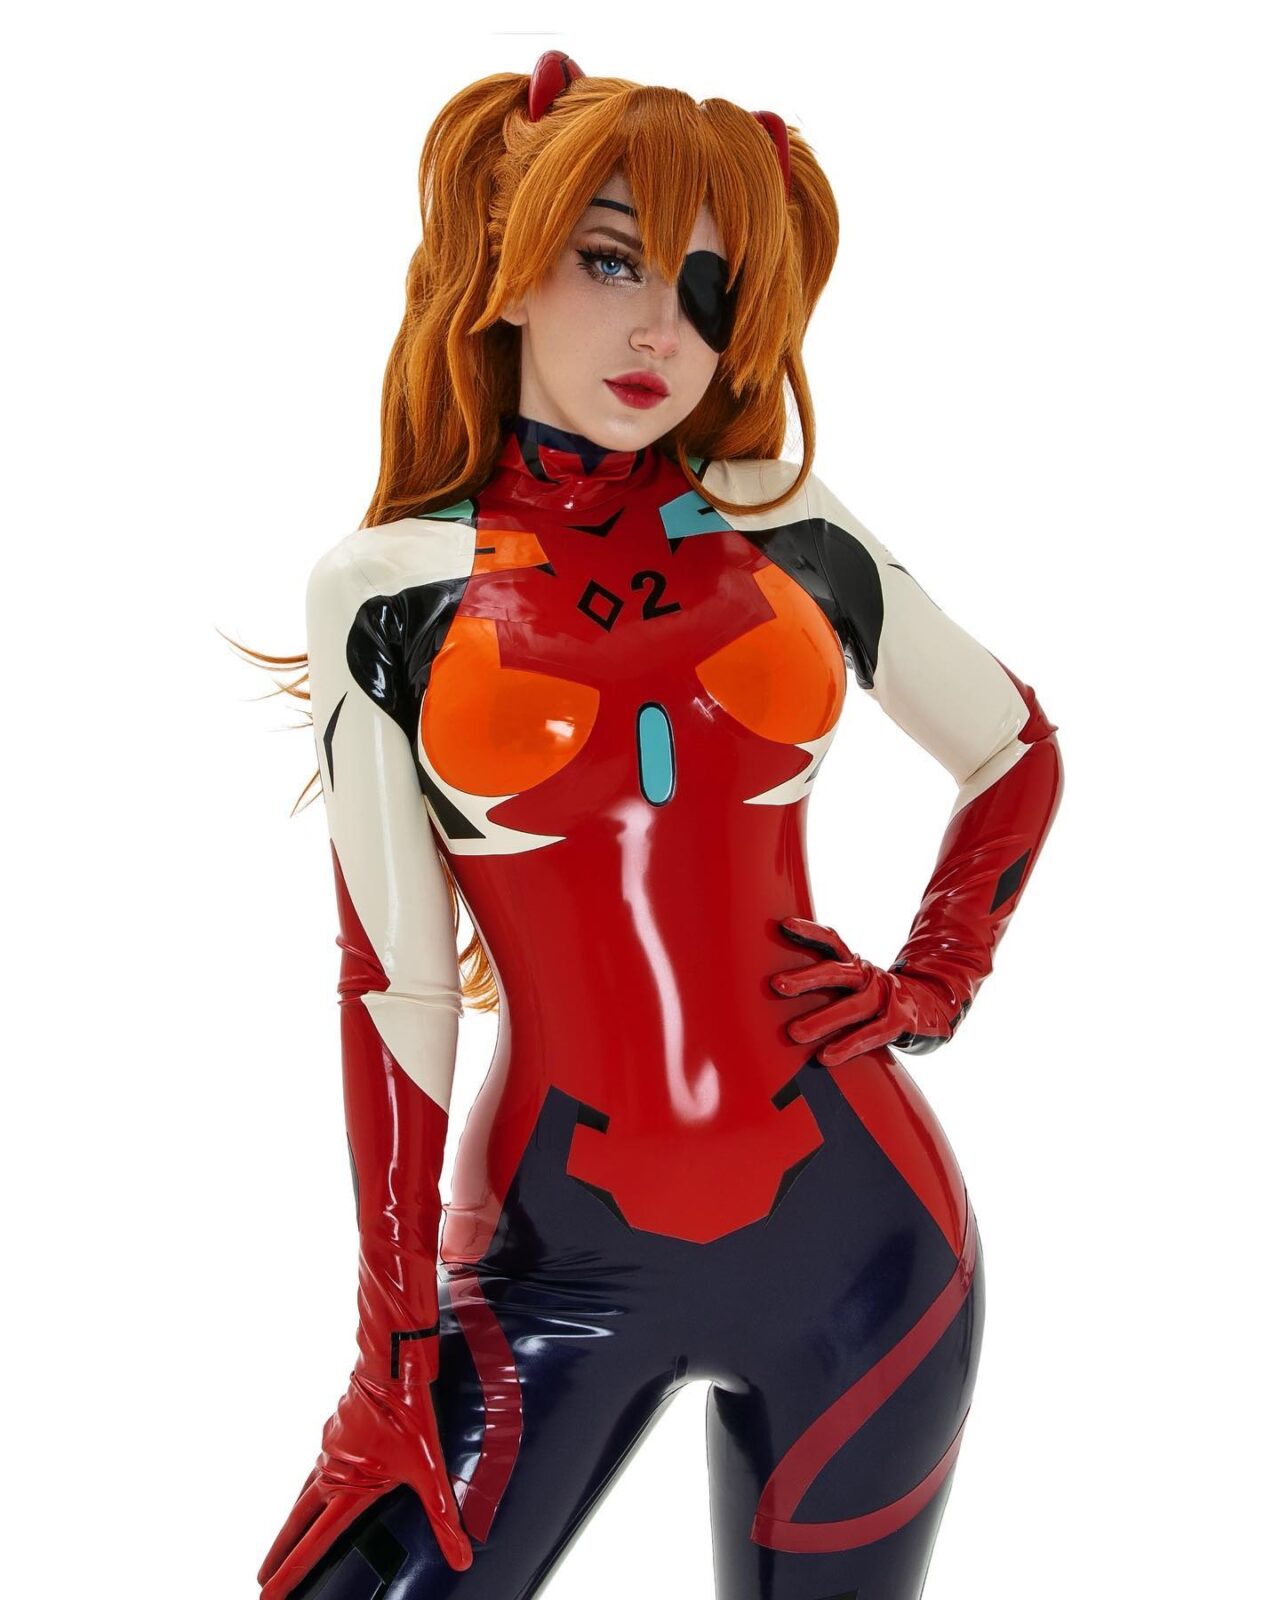 Modelo Ulichan fez um belíssimo cosplay da Asuka de Neon Genesis Evangelion